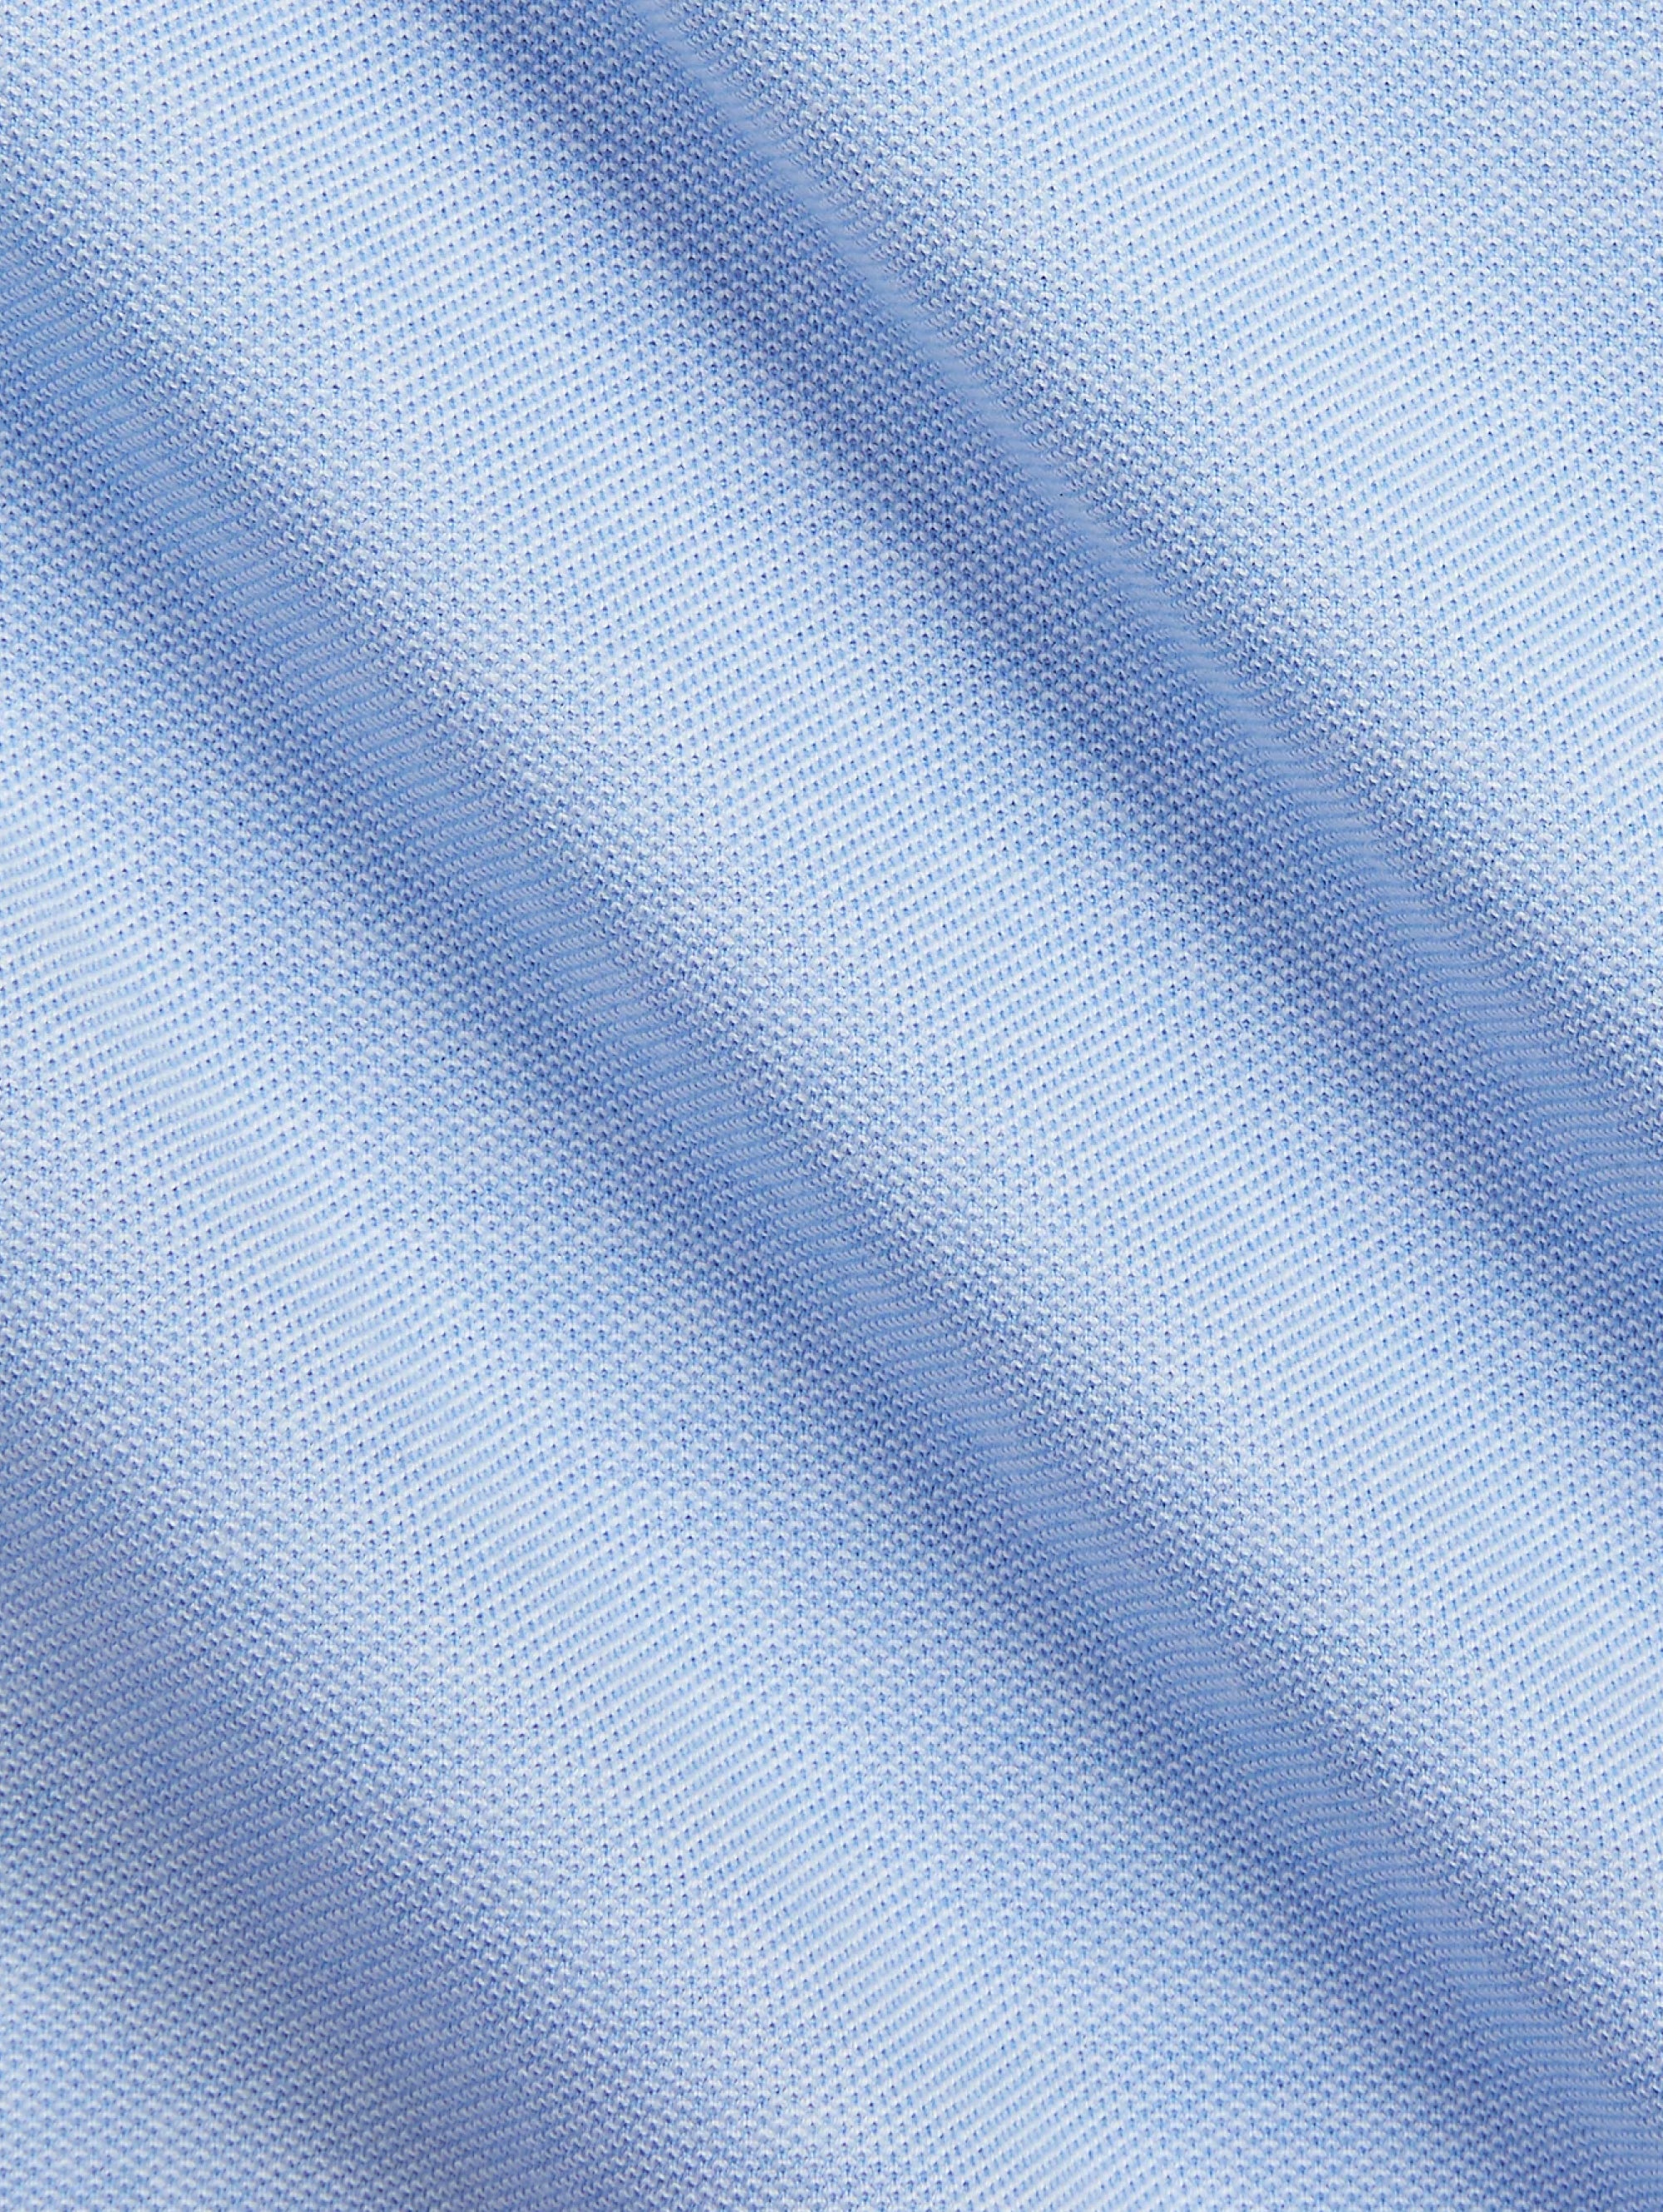 Oxford-blaues Strickhemd